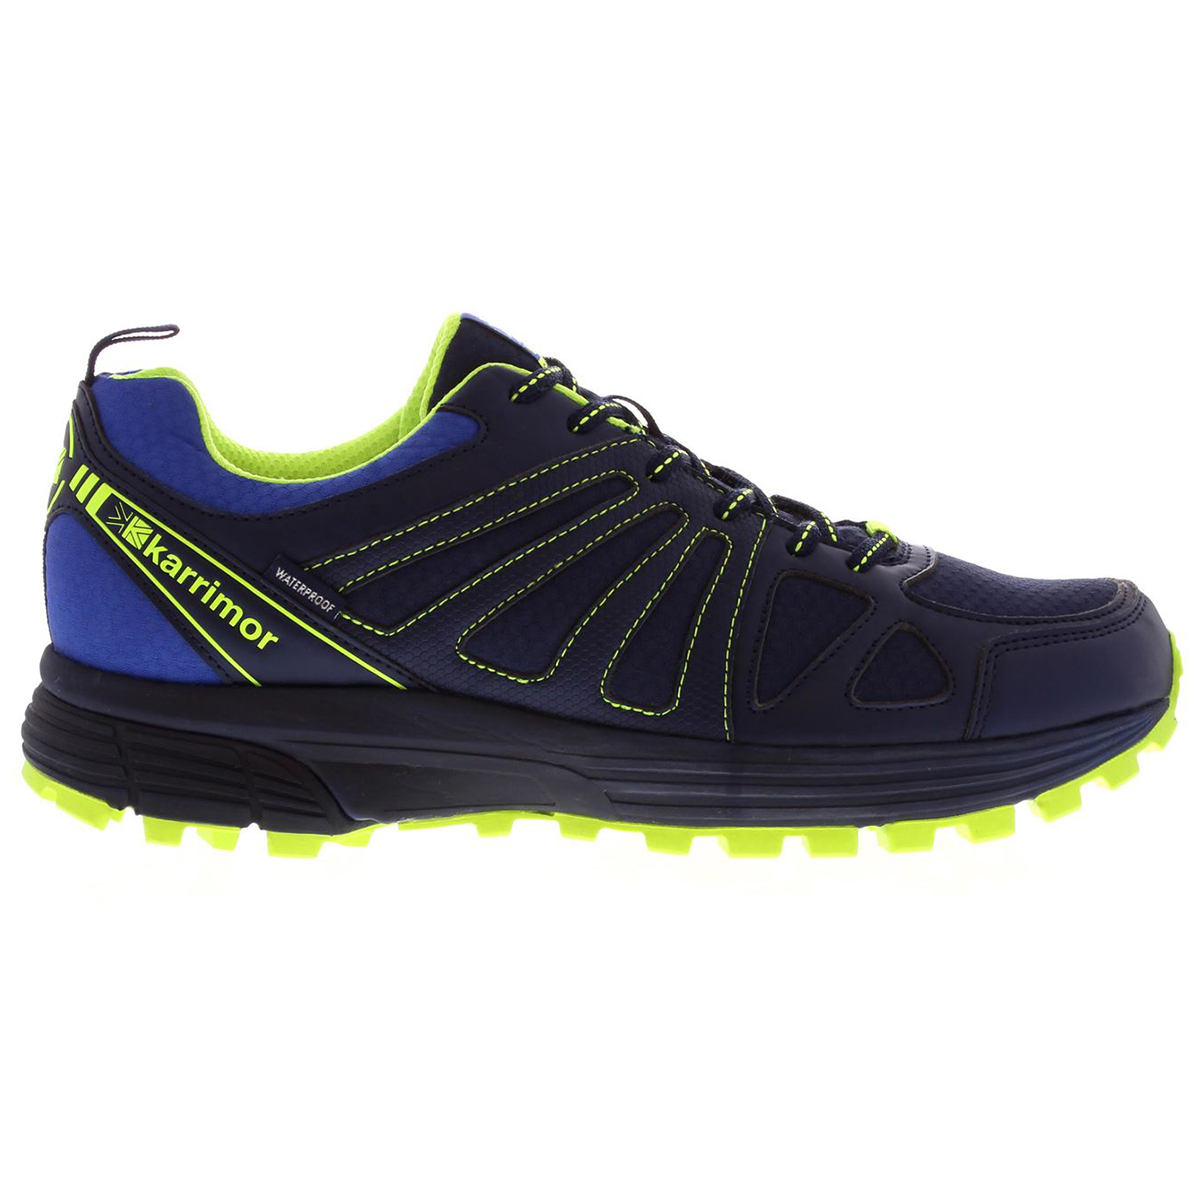 Karrimor Men's Caracal Waterproof Trail Running Shoes - Blue, 10